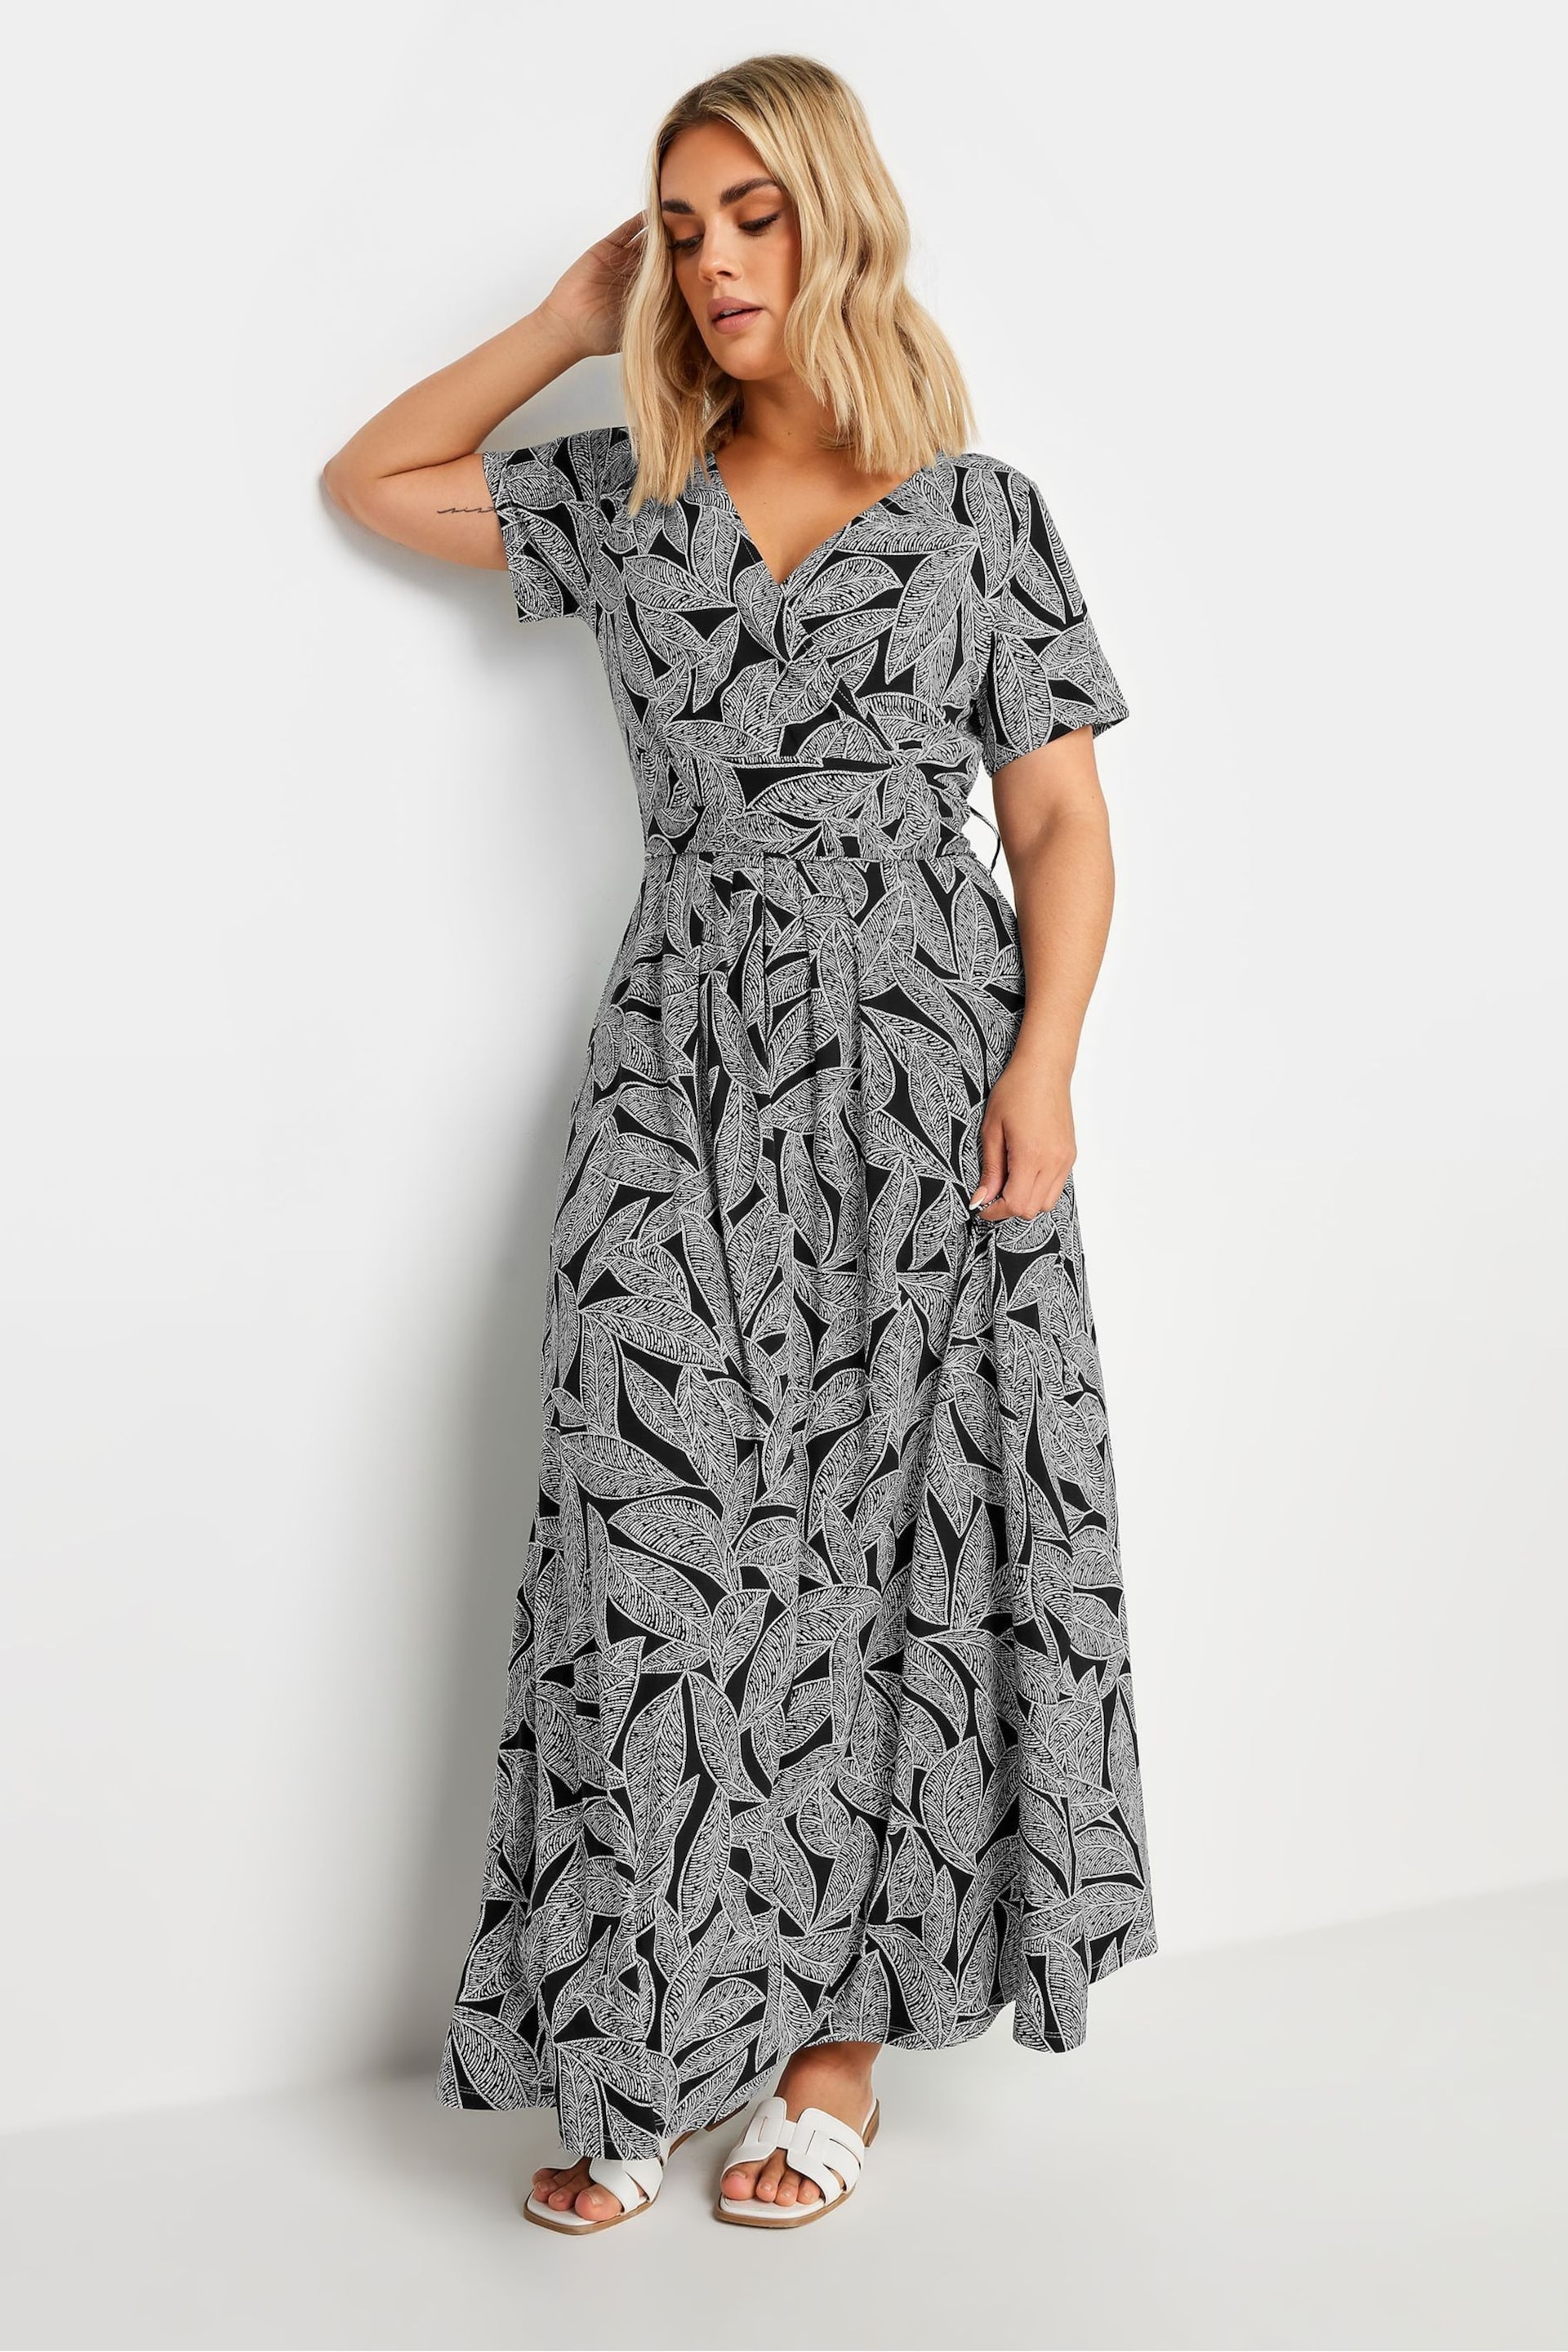 Yours Curve Black Leaf Print Tie Maxi Dress - Image 2 of 5